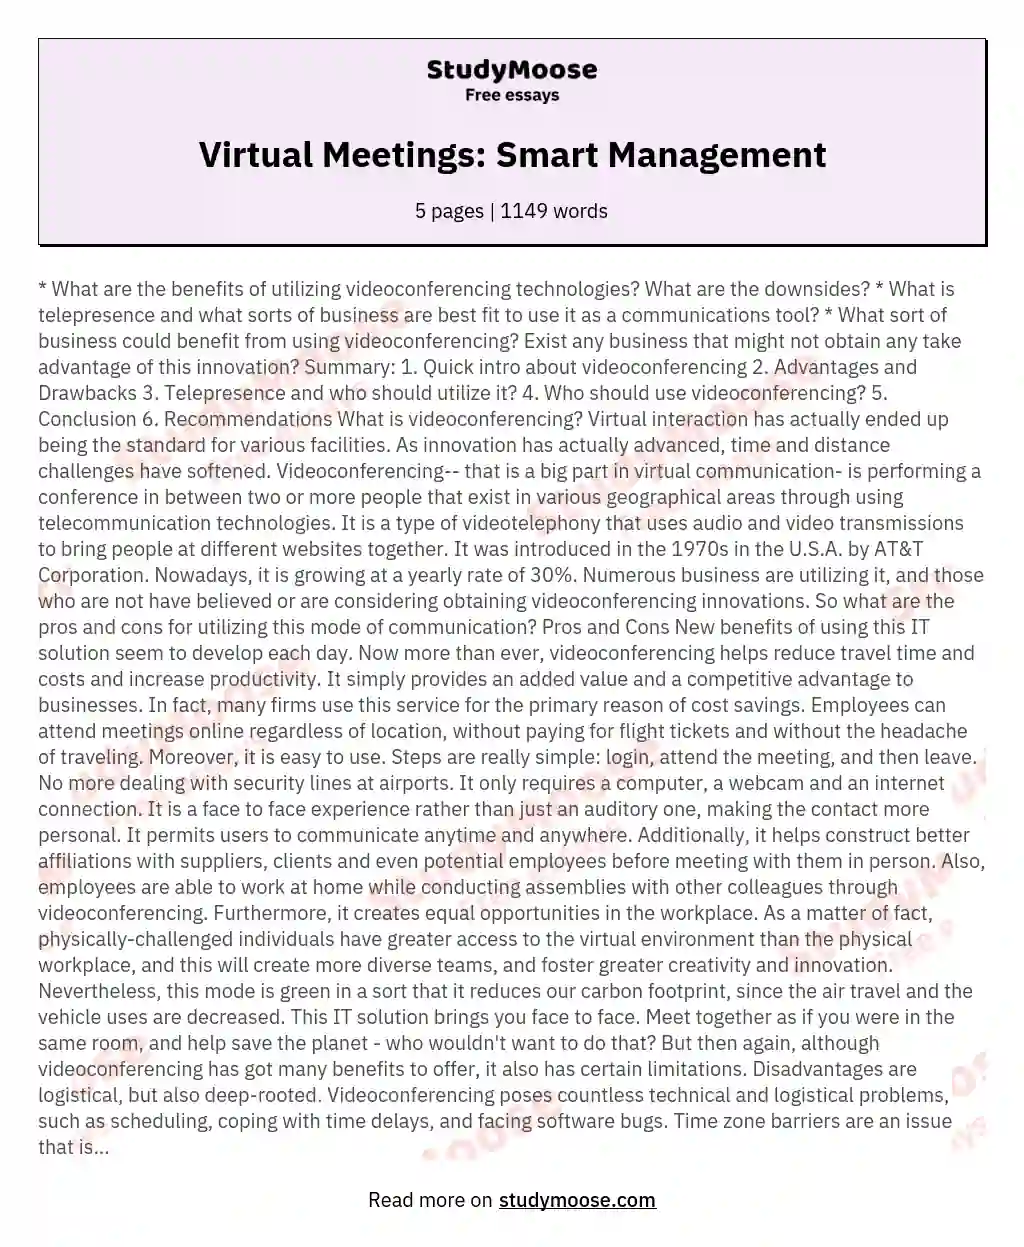 Virtual Meetings: Smart Management essay